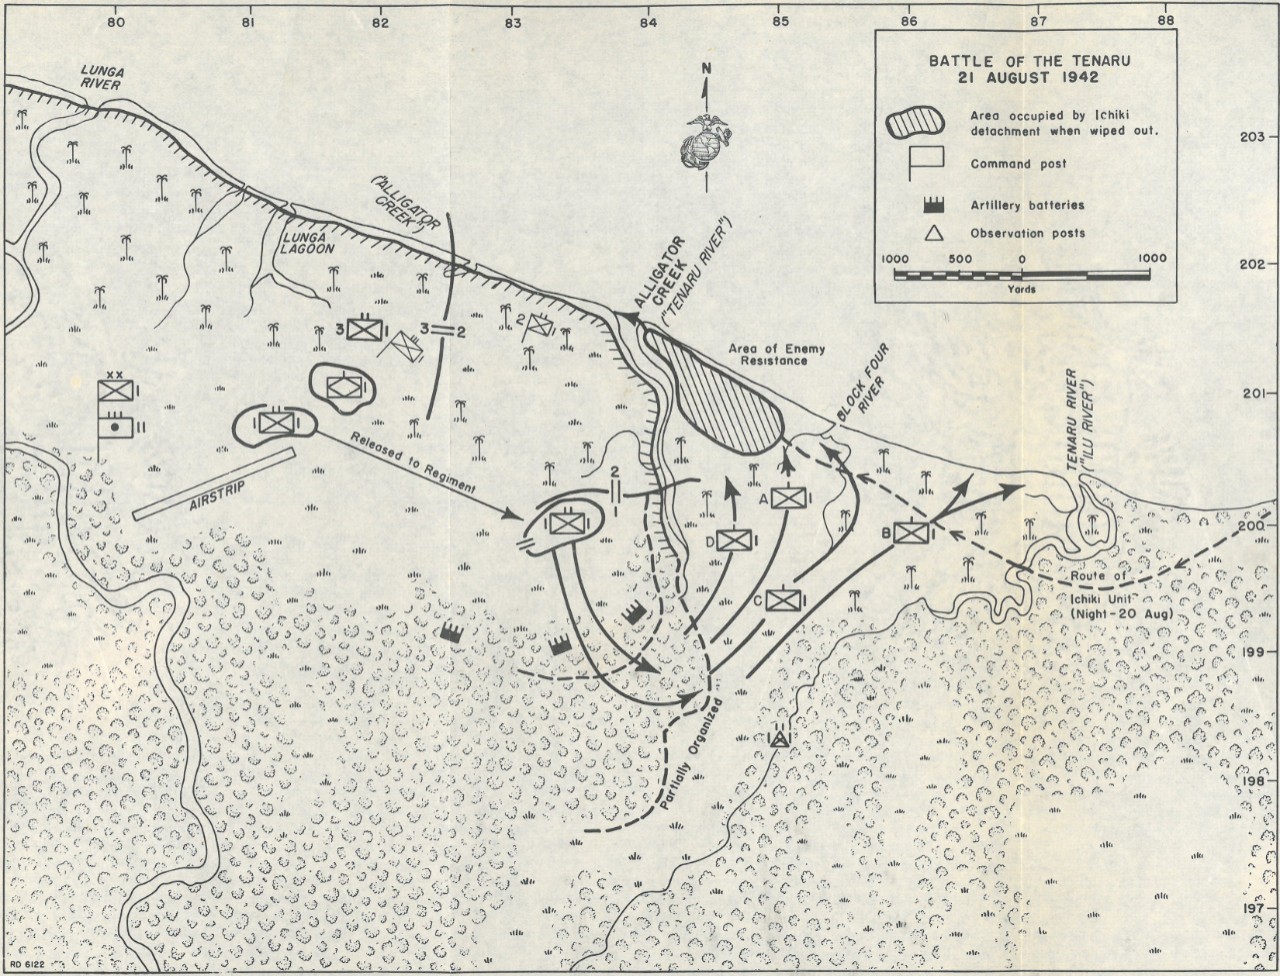 Map 6: Battle of the Tenaru: 21 August 1942